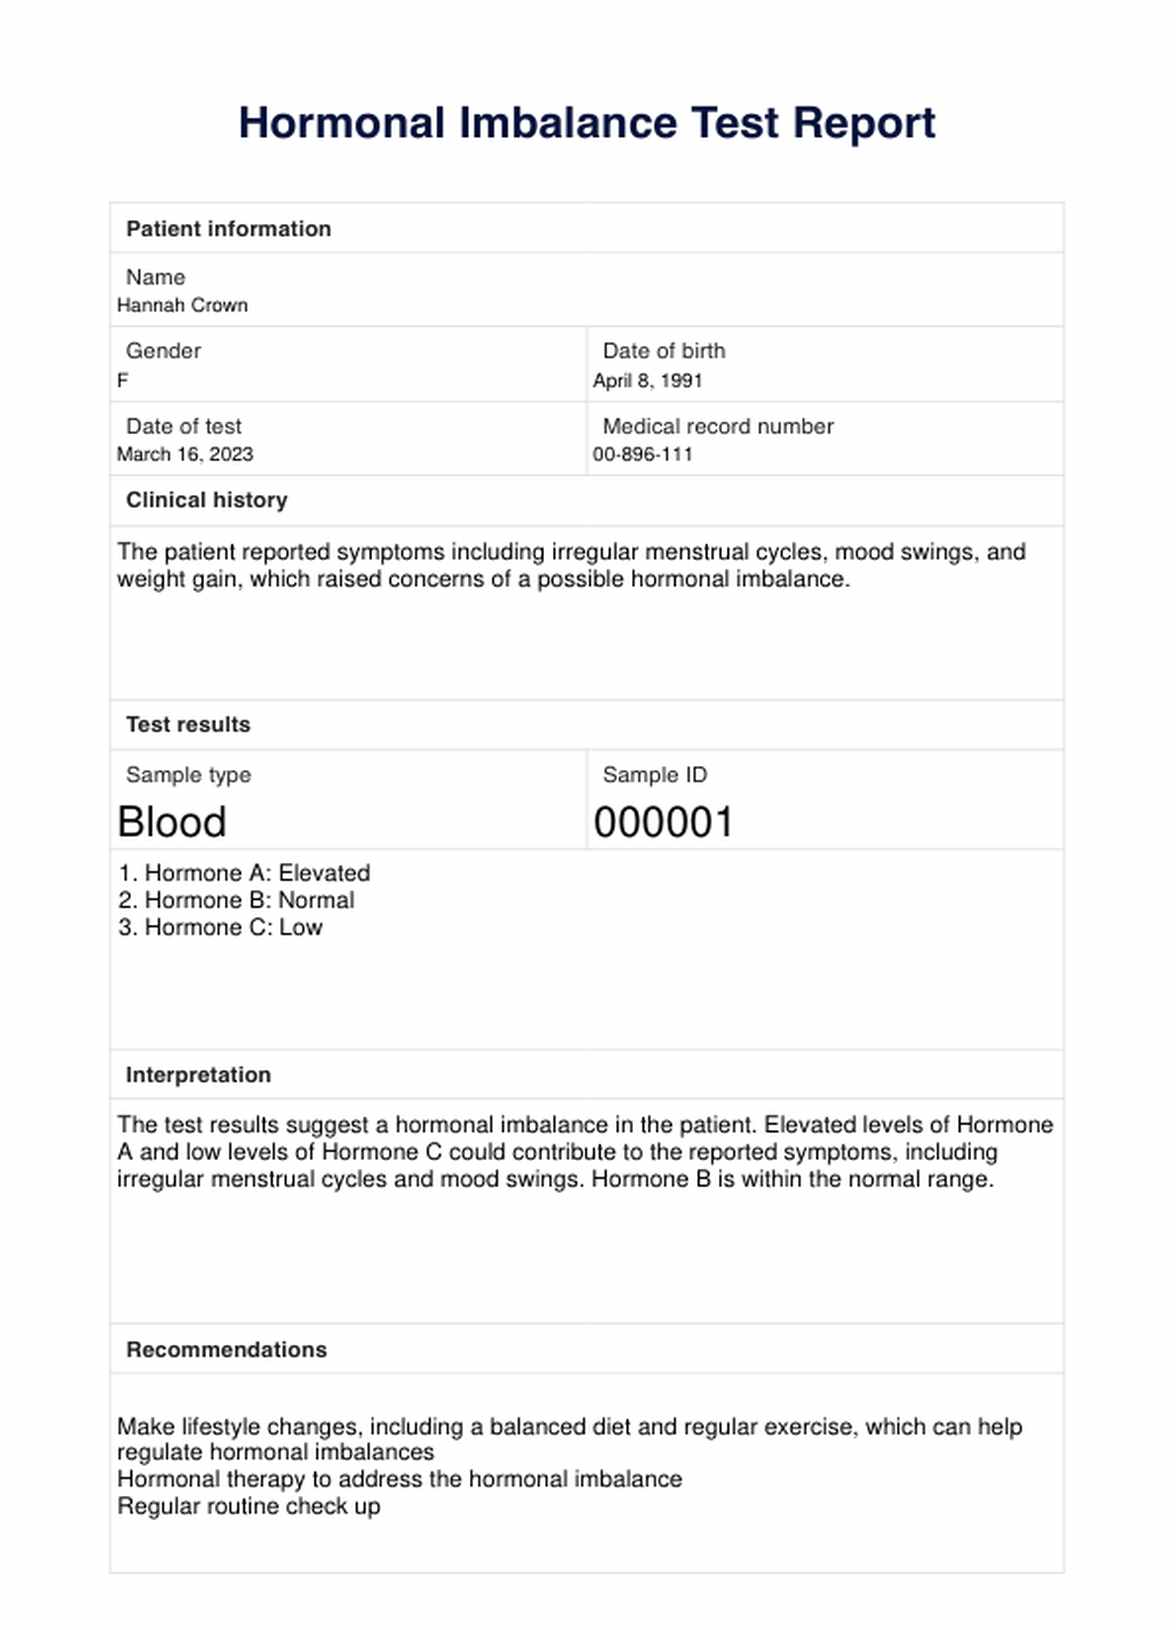 Hormonal Imbalance Test PDF Example